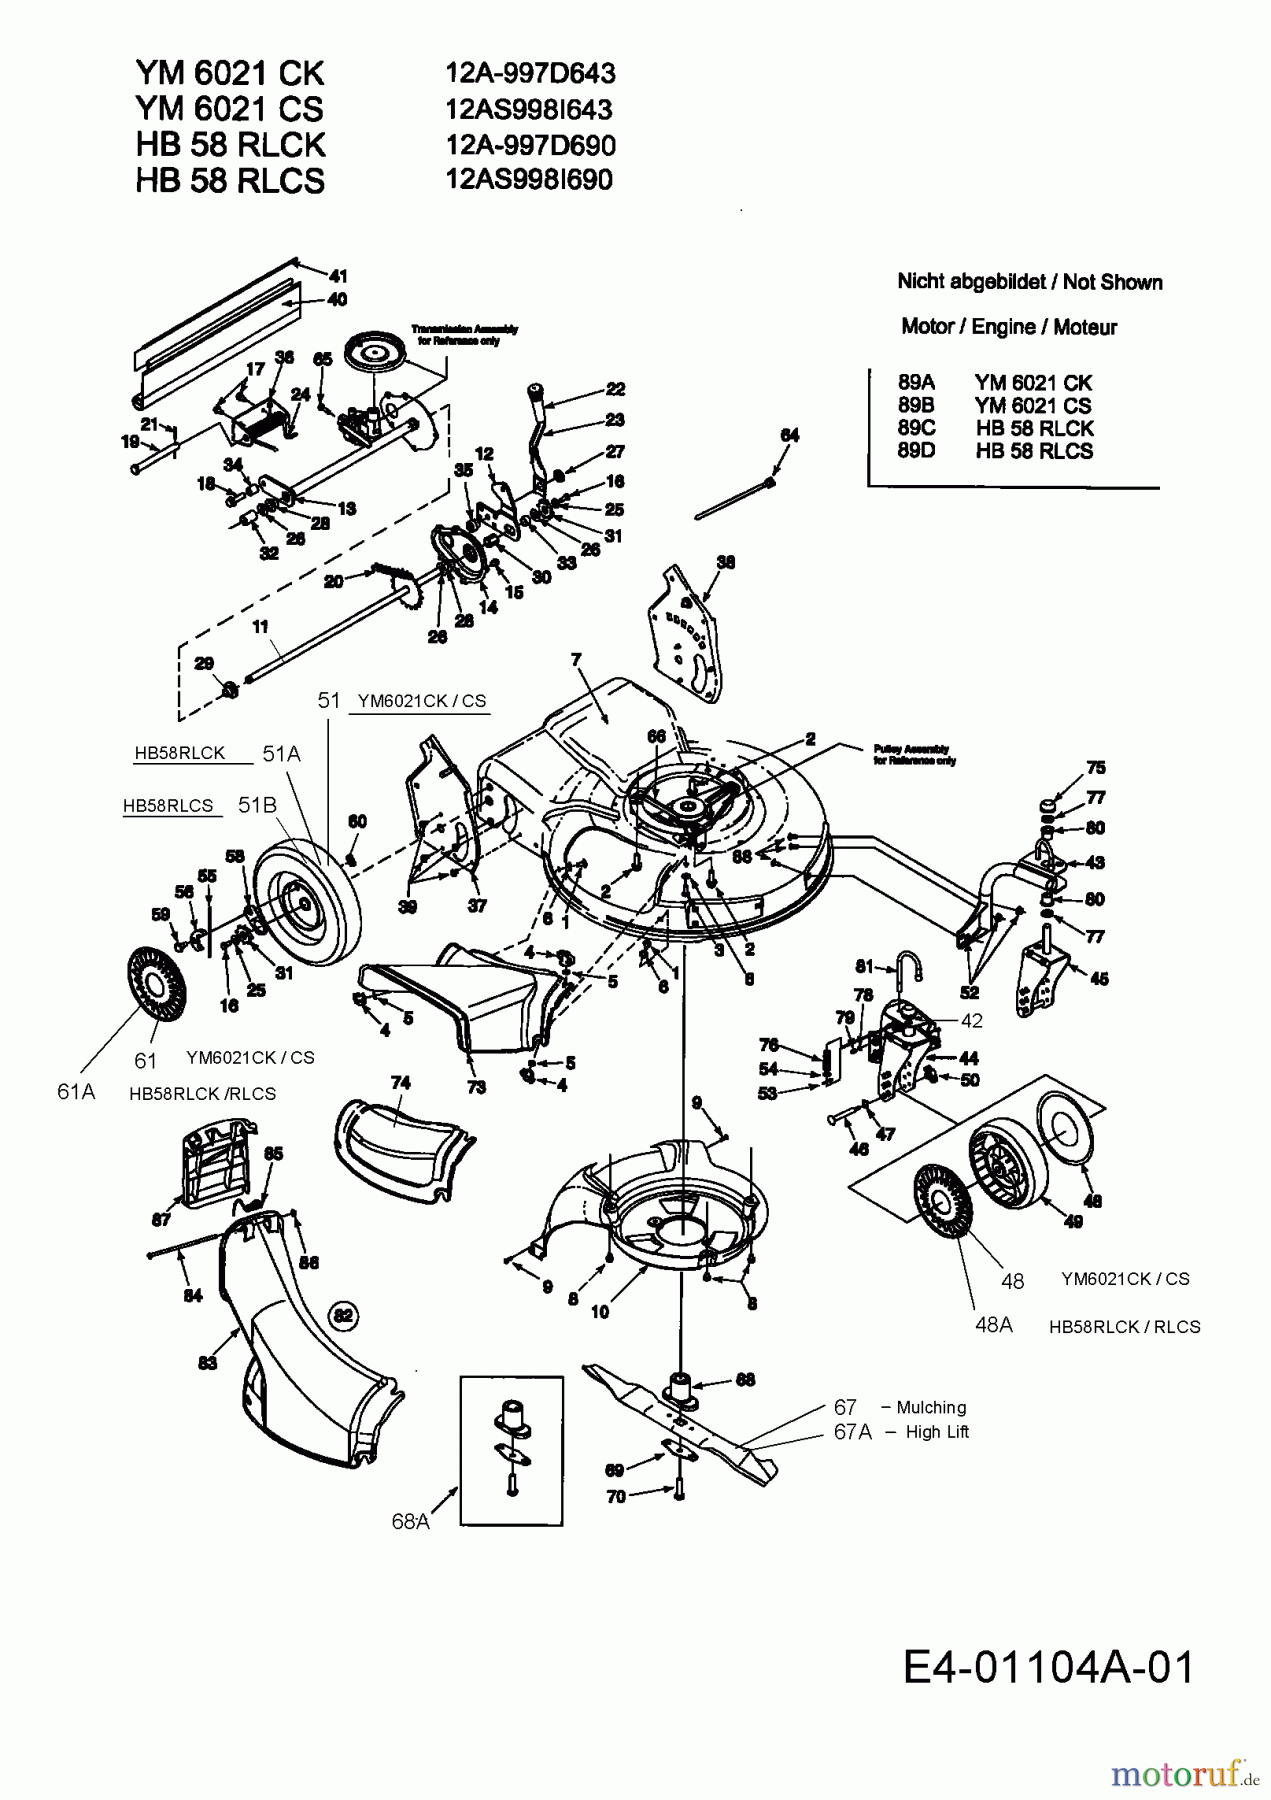  Gutbrod Petrol mower self propelled HB 58 RLCS 12AS998I690  (2004) Basic machine